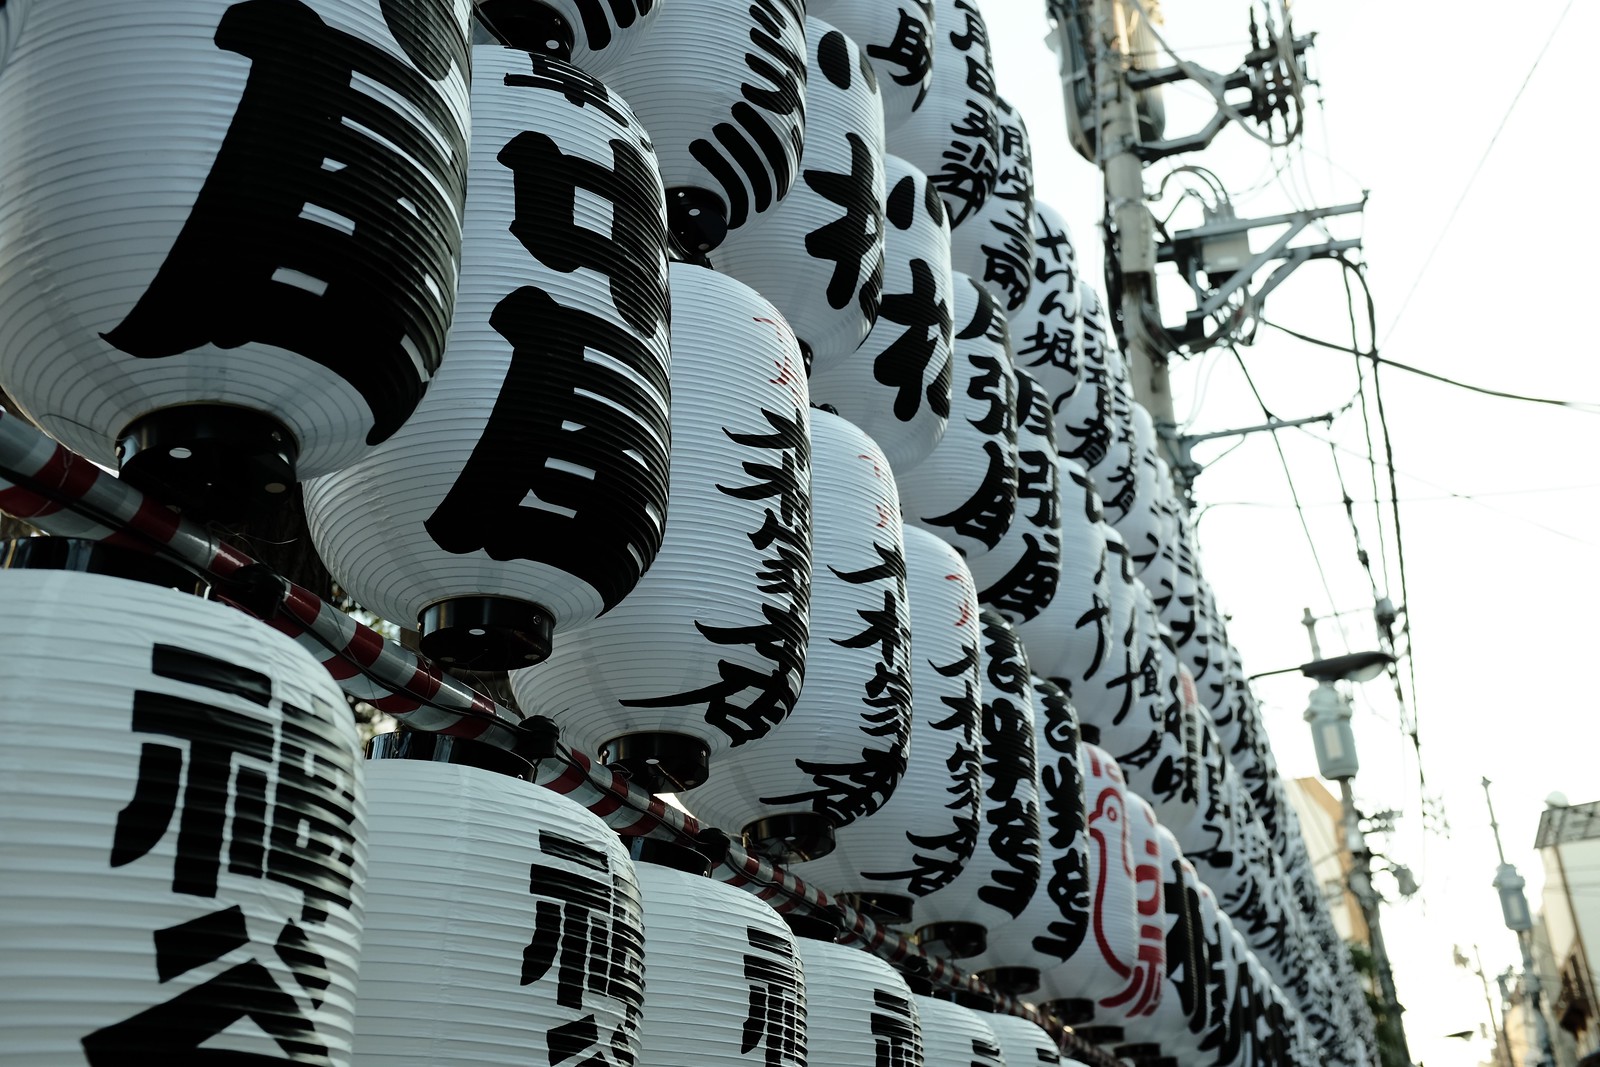 The Asakusa new year by FUJIFILM X100S.